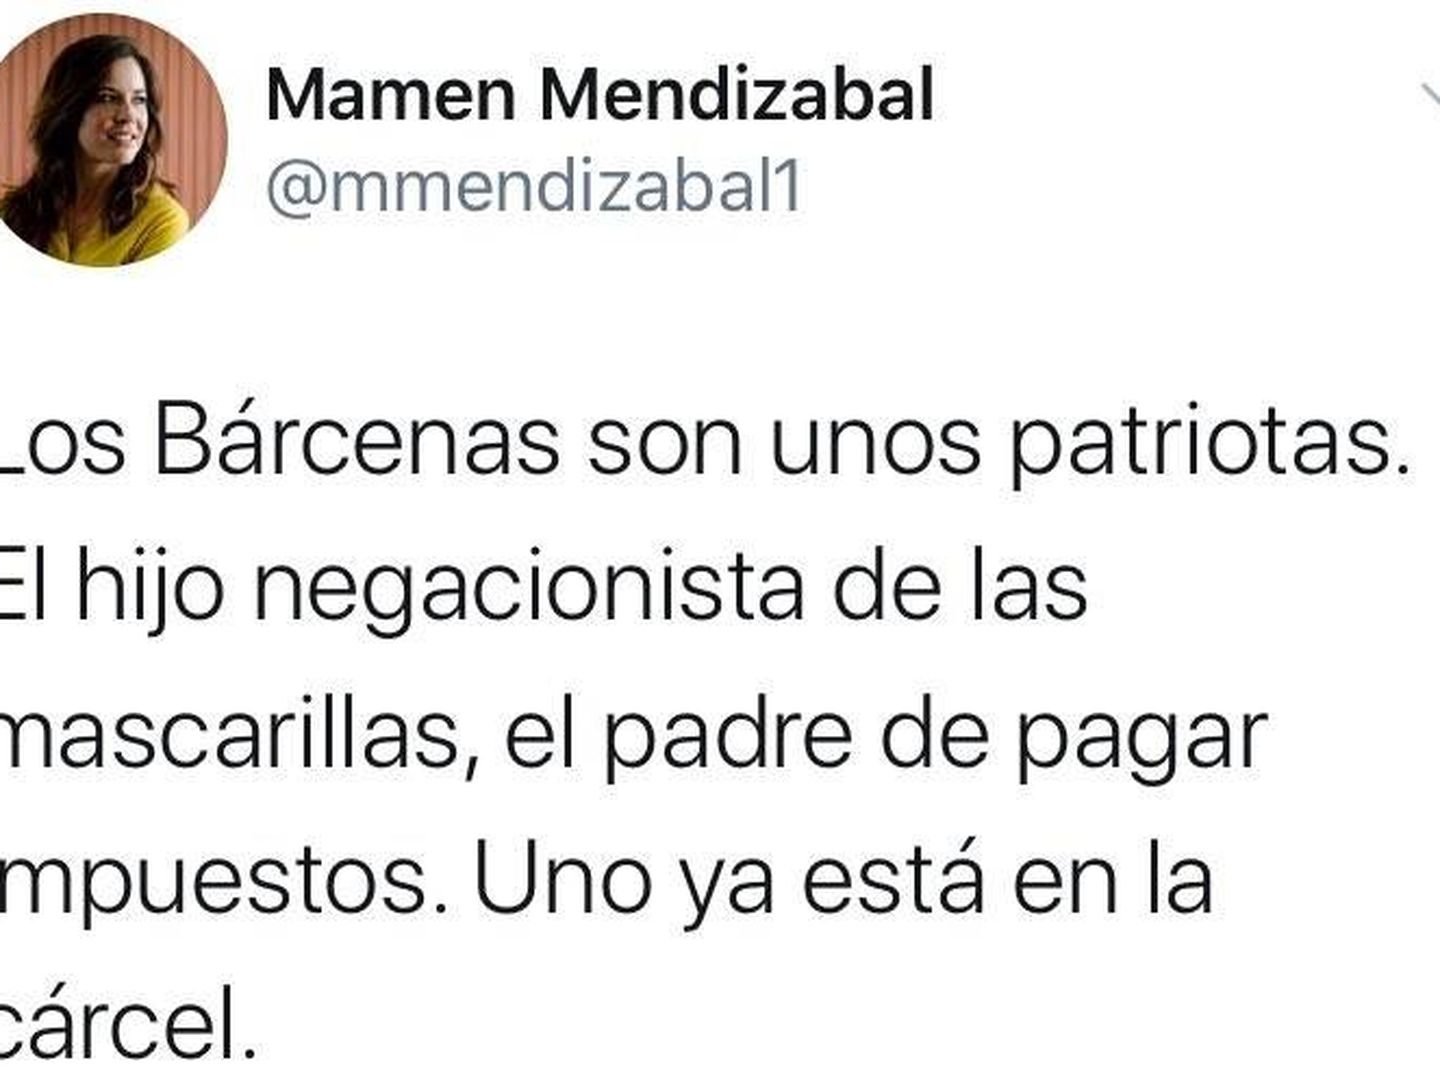 Mamen Mendizábal criticando a Willy Bárcenas. (Twitter).